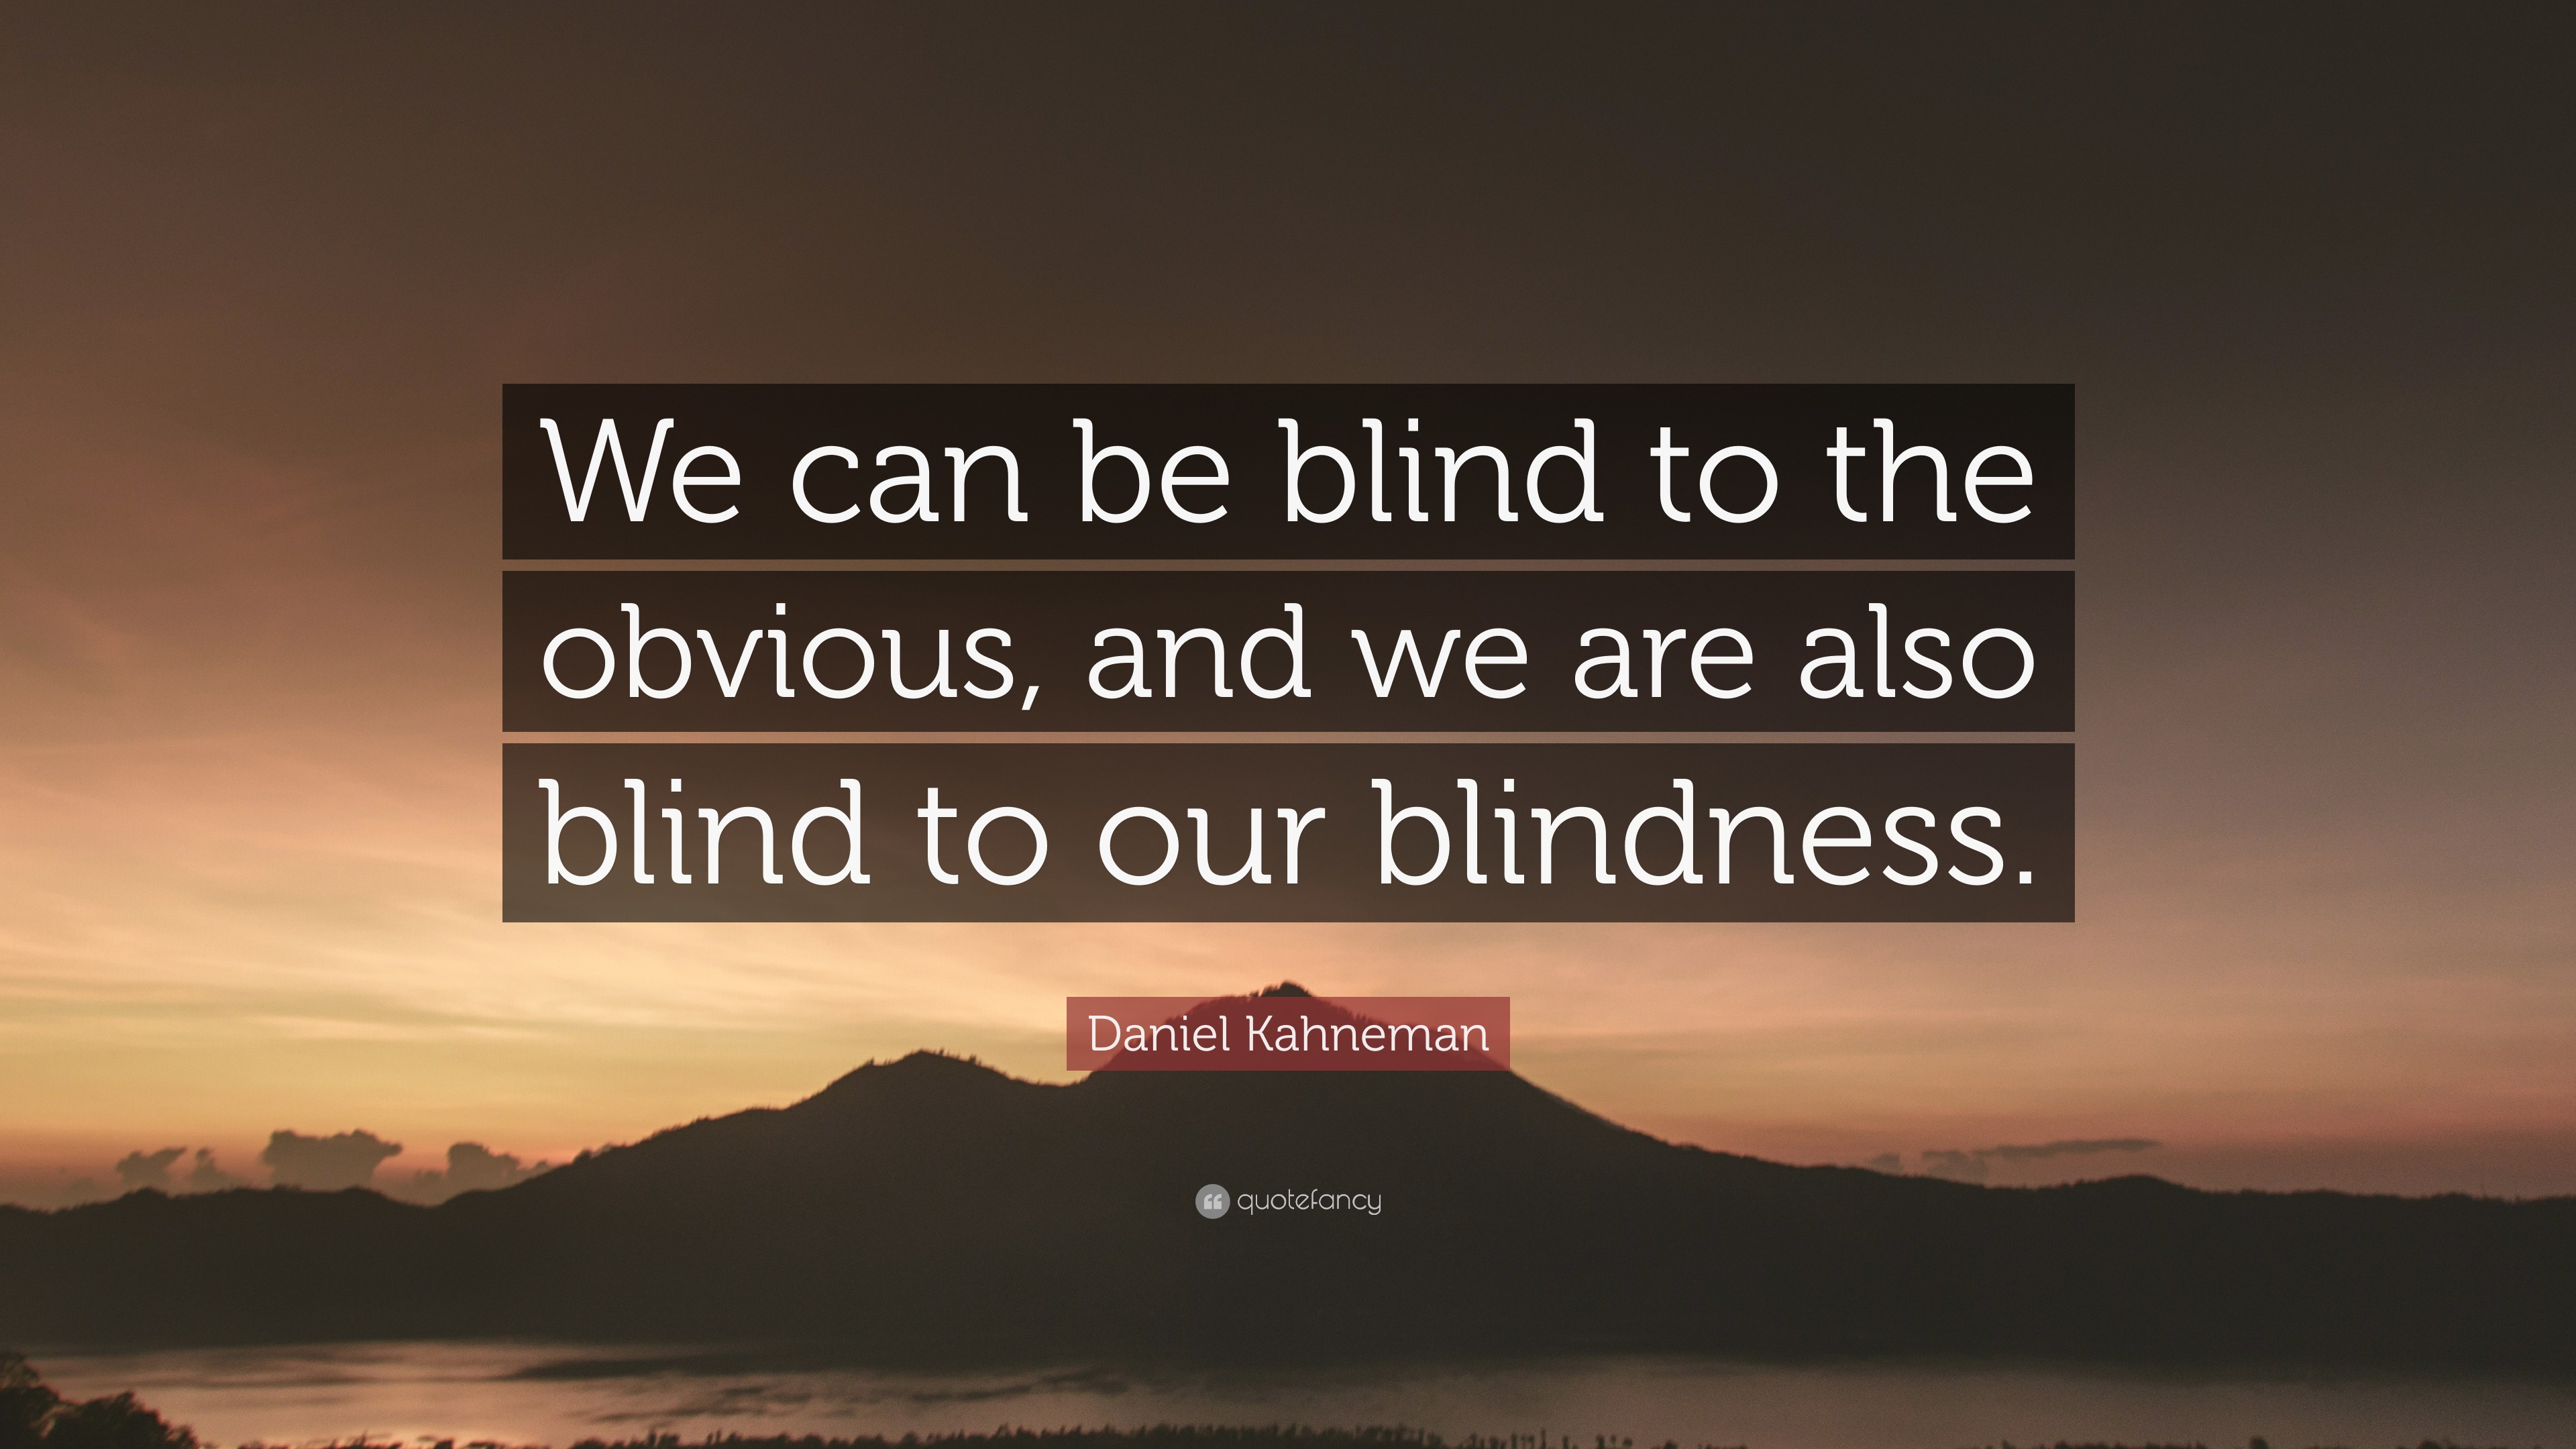 essay on blindness